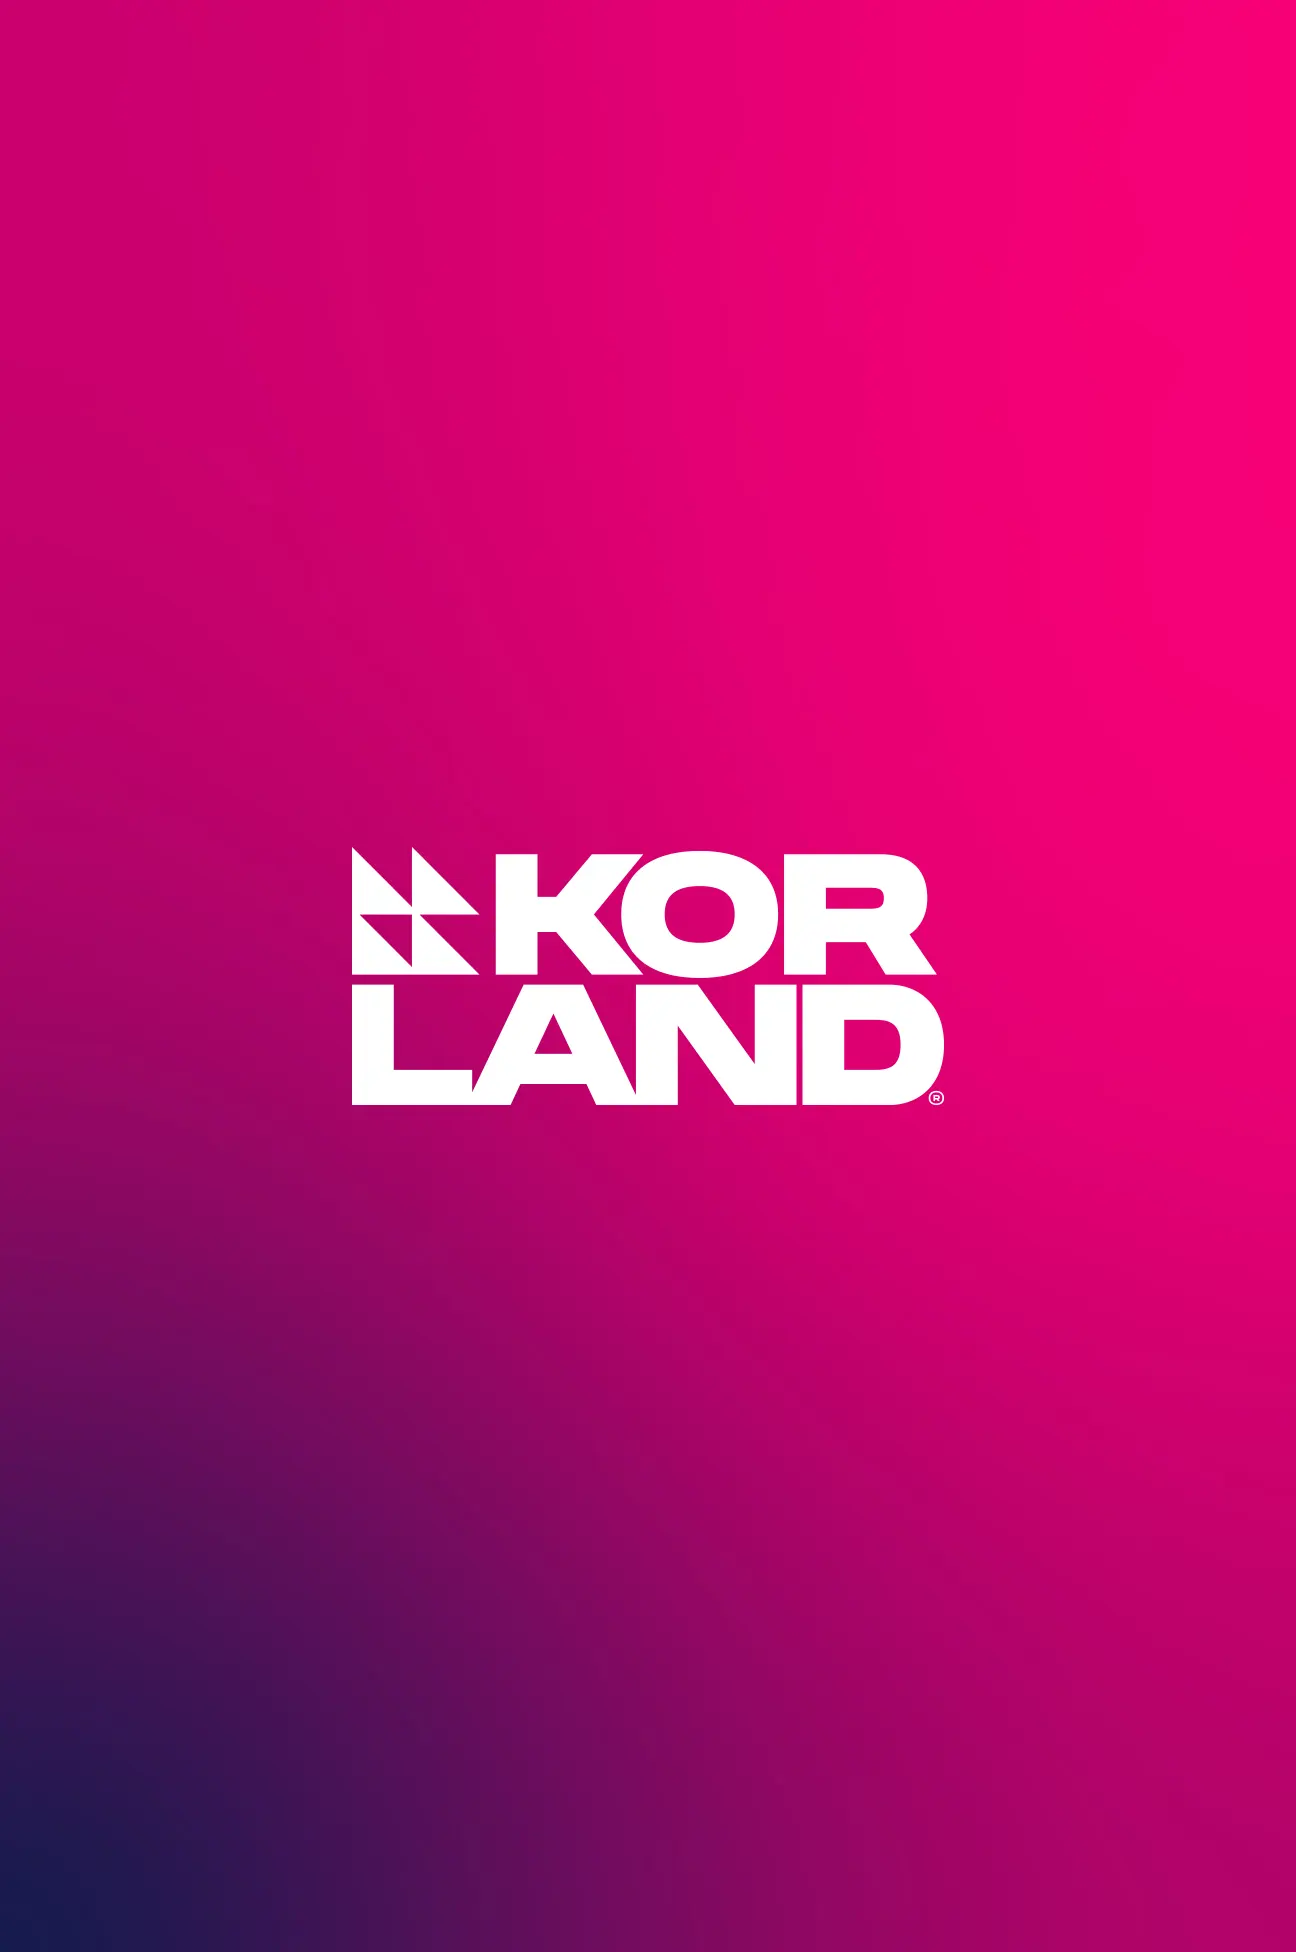 Korland Logo on a pink gradient